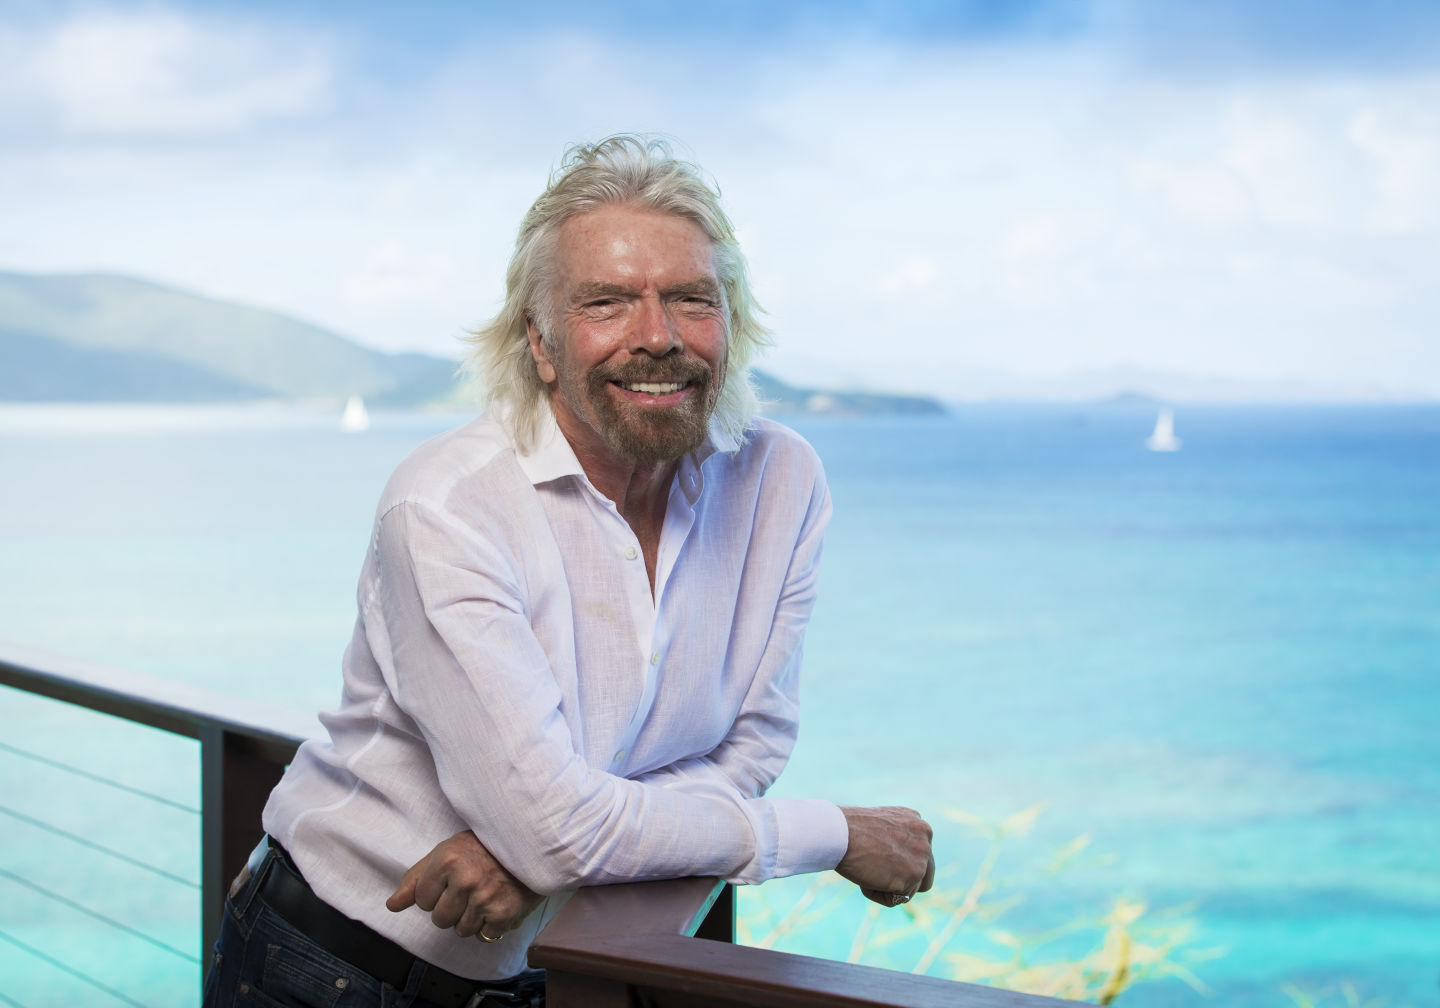 Richard Branson smiling next to the ocean